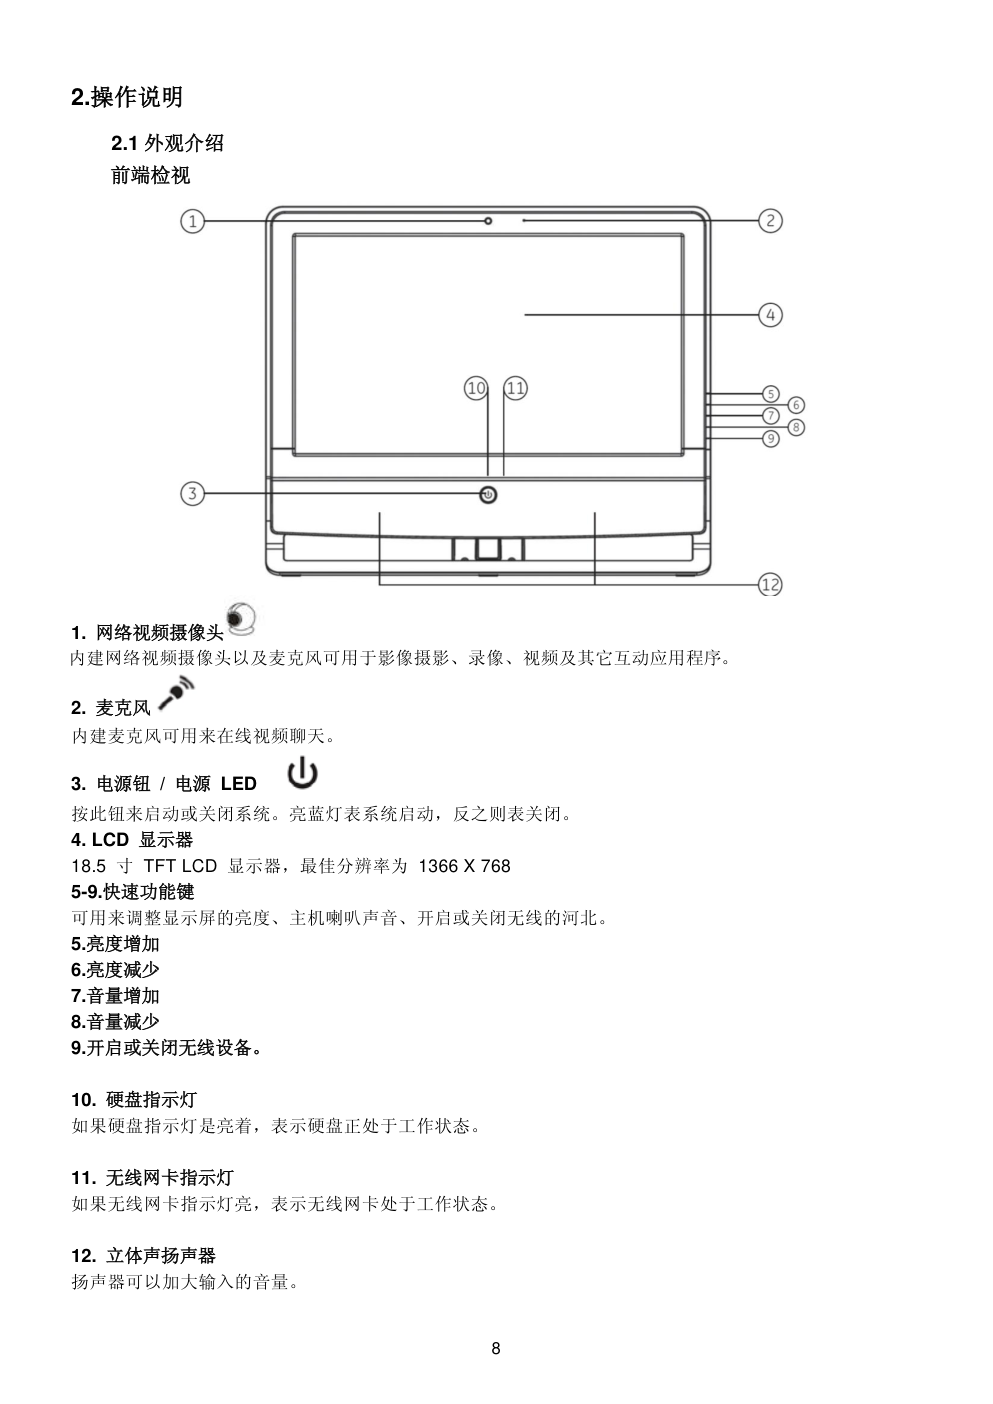 AOC M92H液晶显示器维修手册和图纸-7